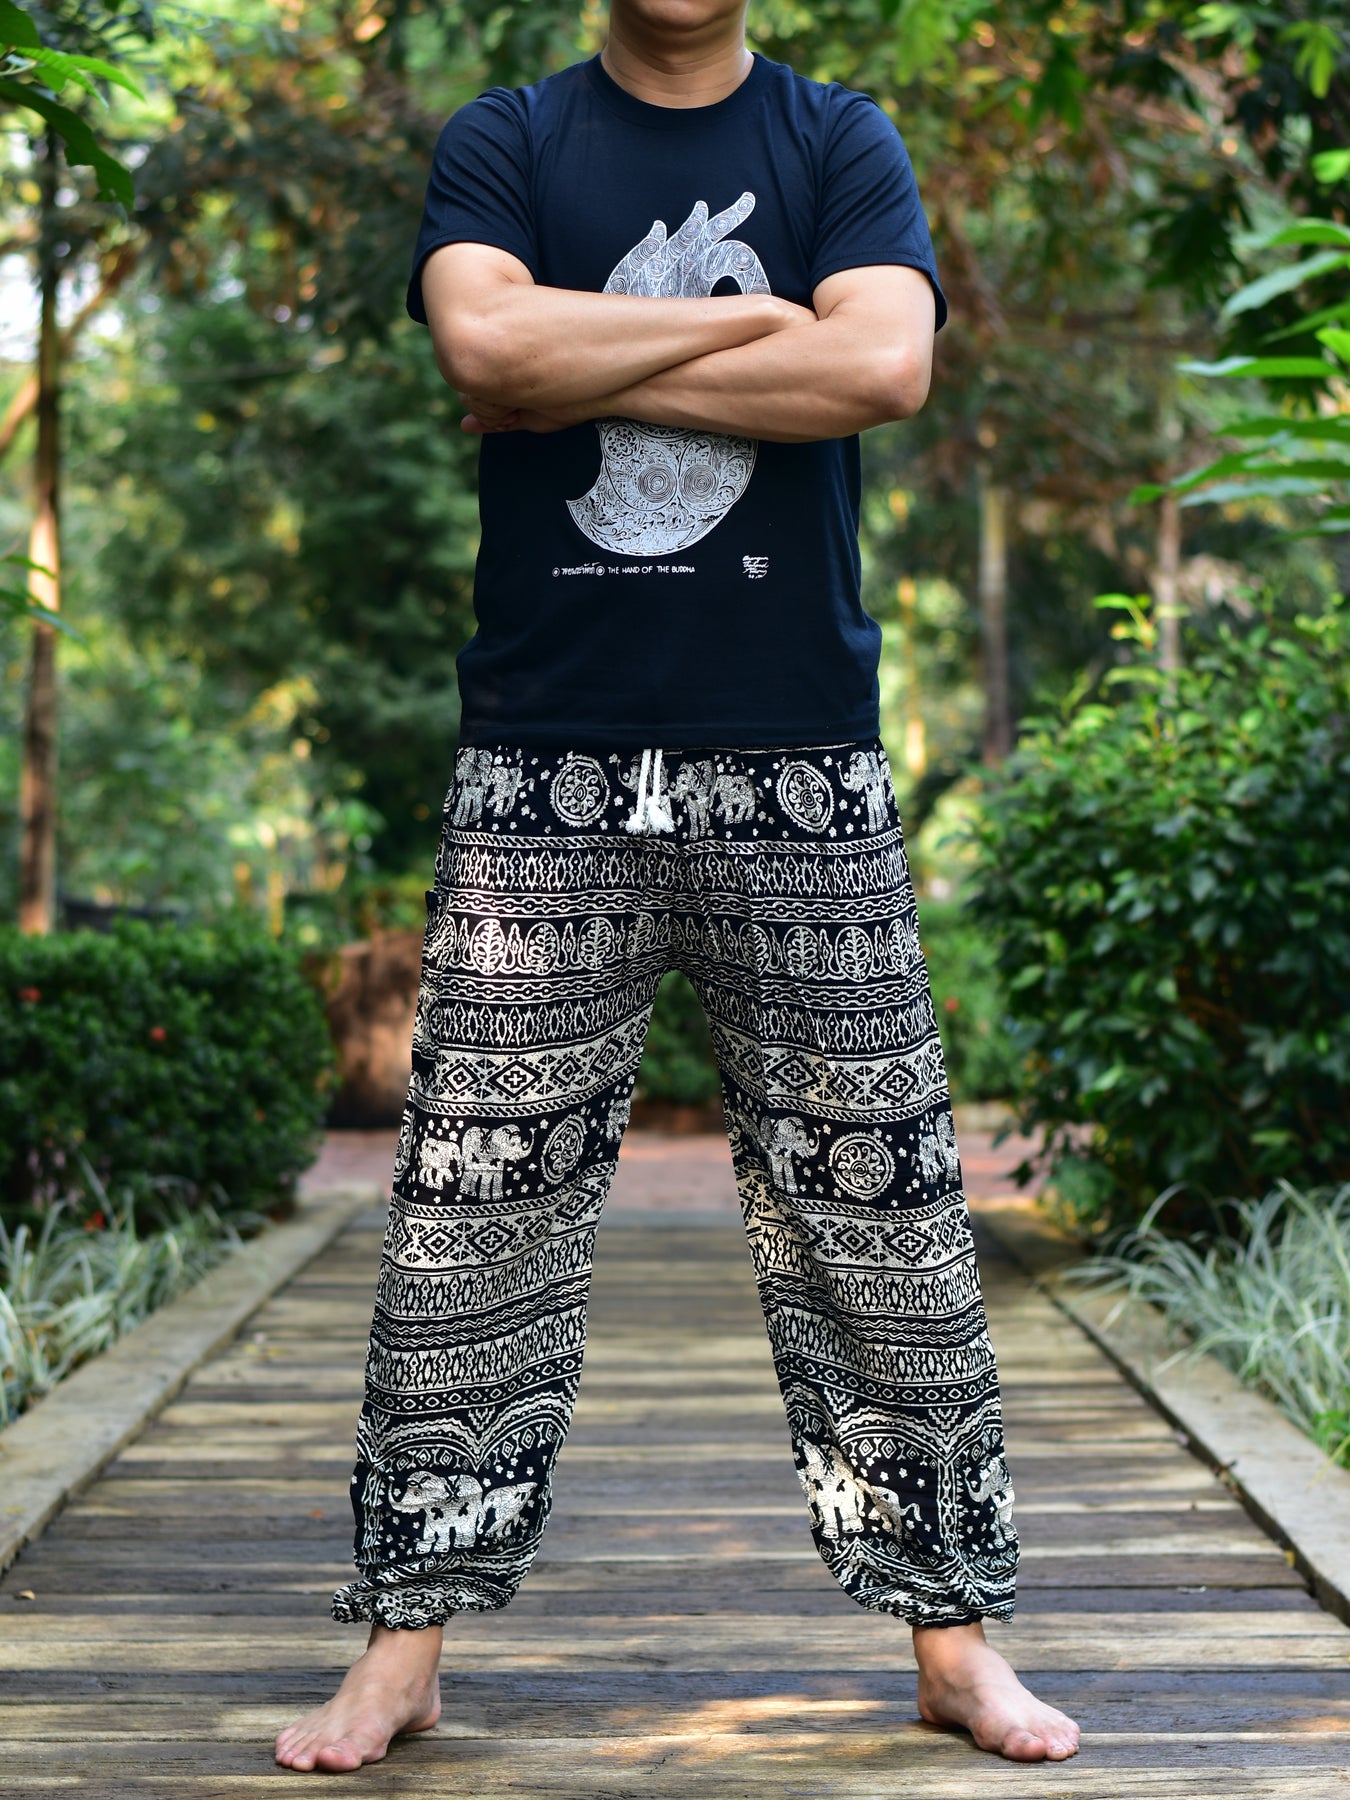 Thai Elephant Pants Harem Yoga Hippie Boho Print Gypsy Festival Dance  Cotton Boy | eBay